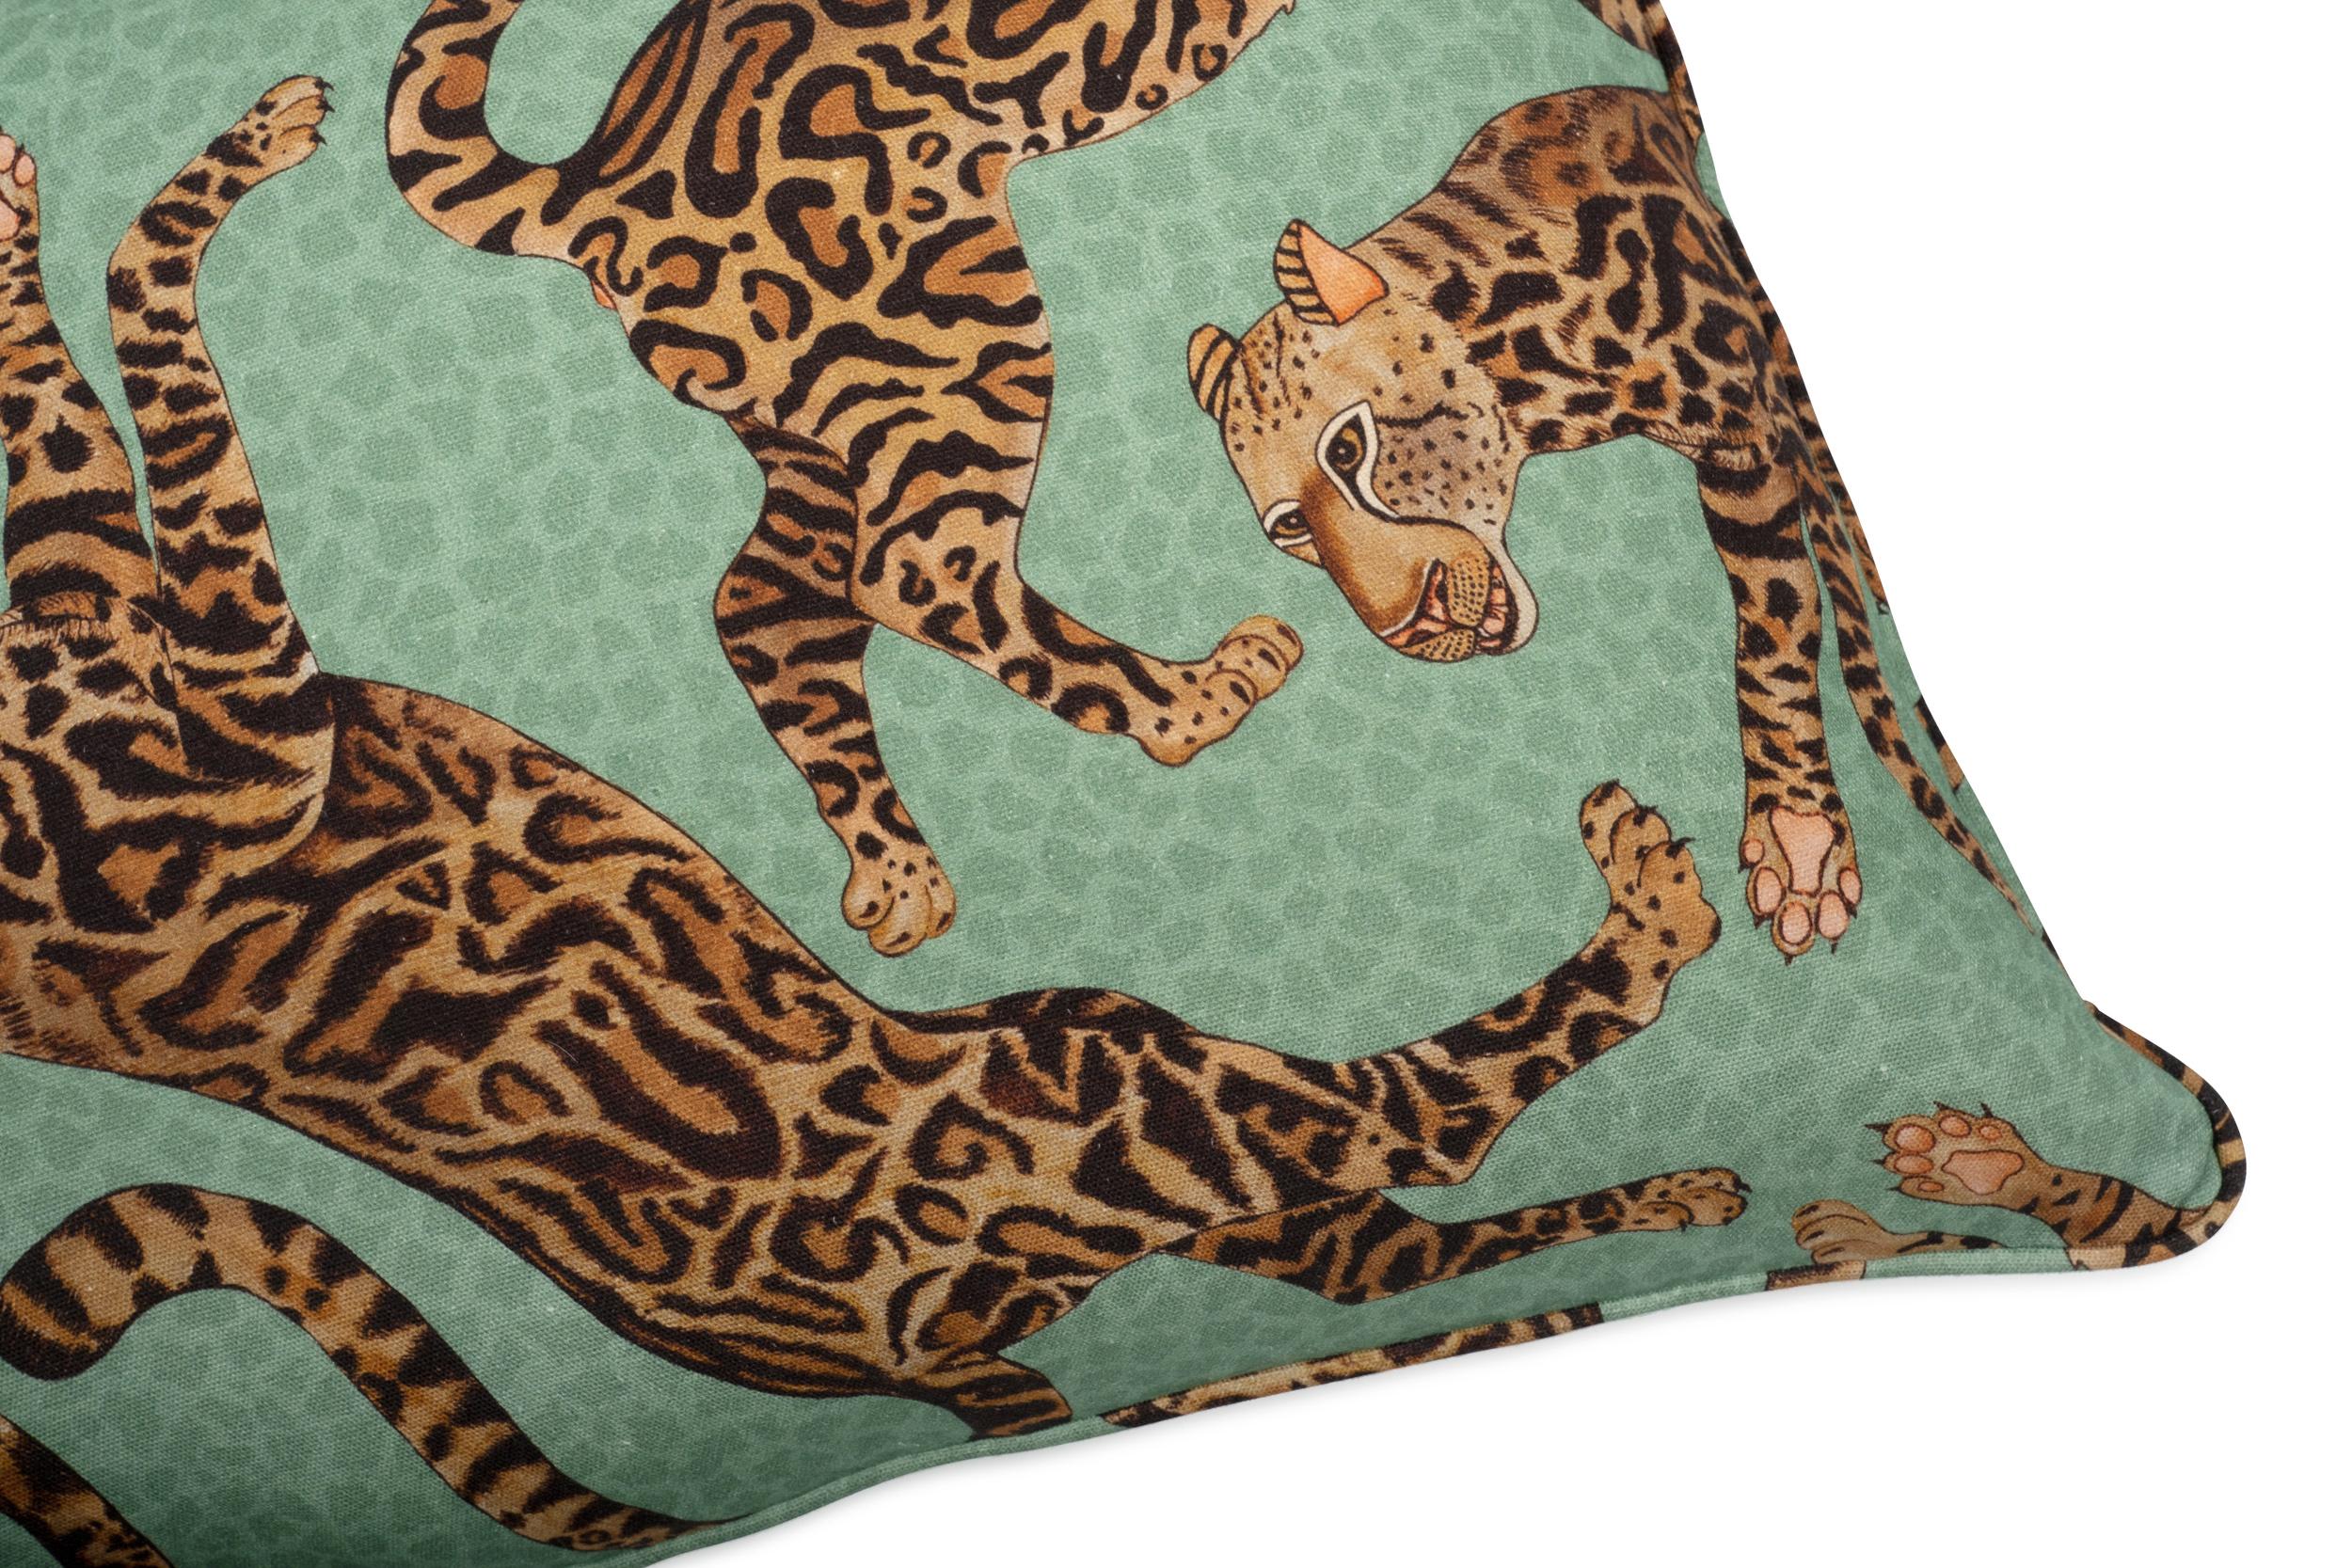 Cheetah Kings Lumbar Pillow - Linen - Jade